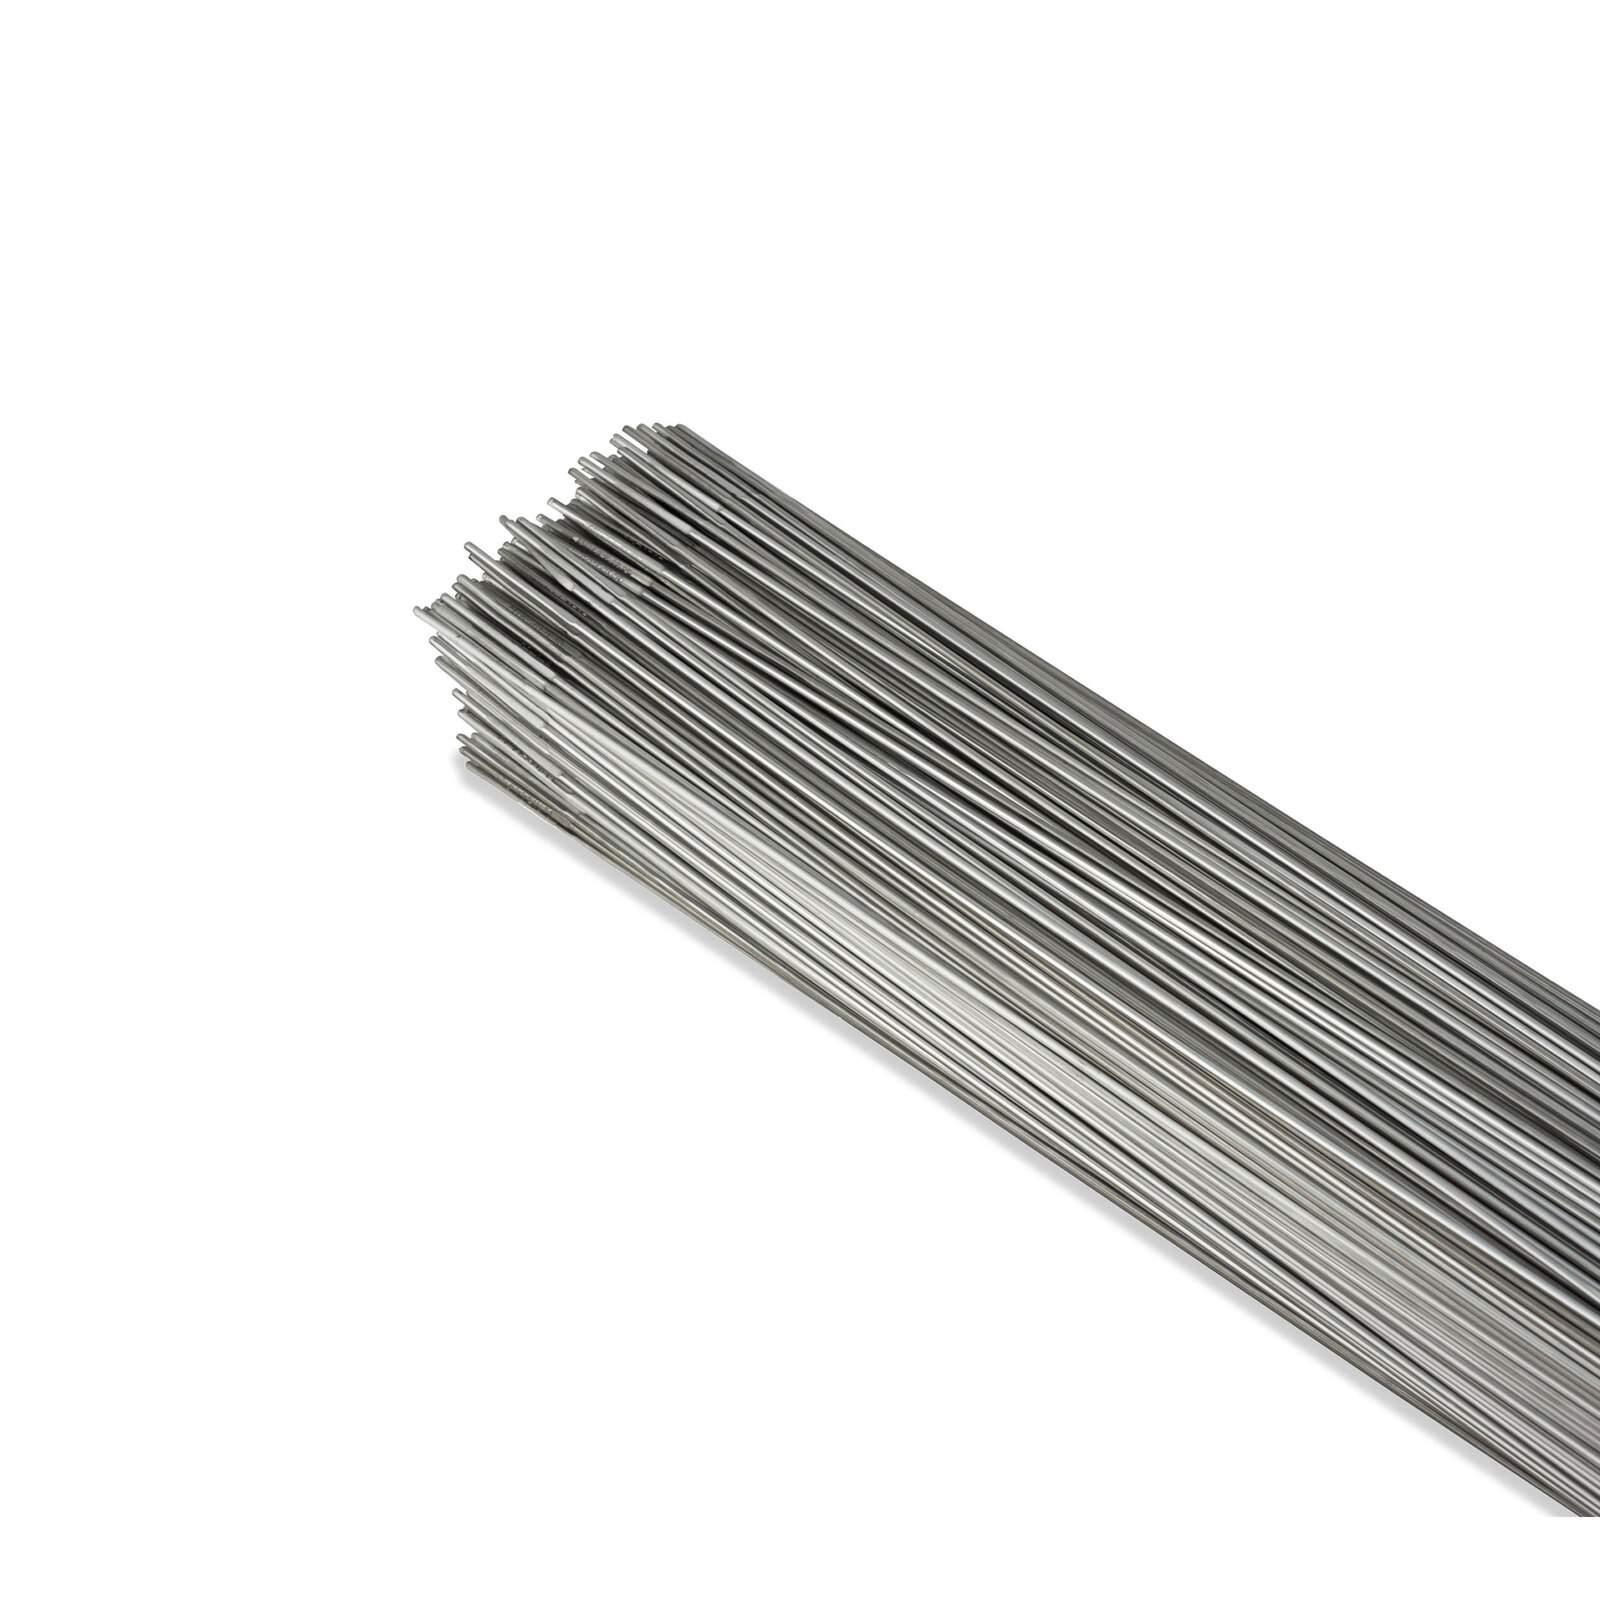 1kg - 1.6mm ER4043 Aluminium TIG Filler Wire Rods